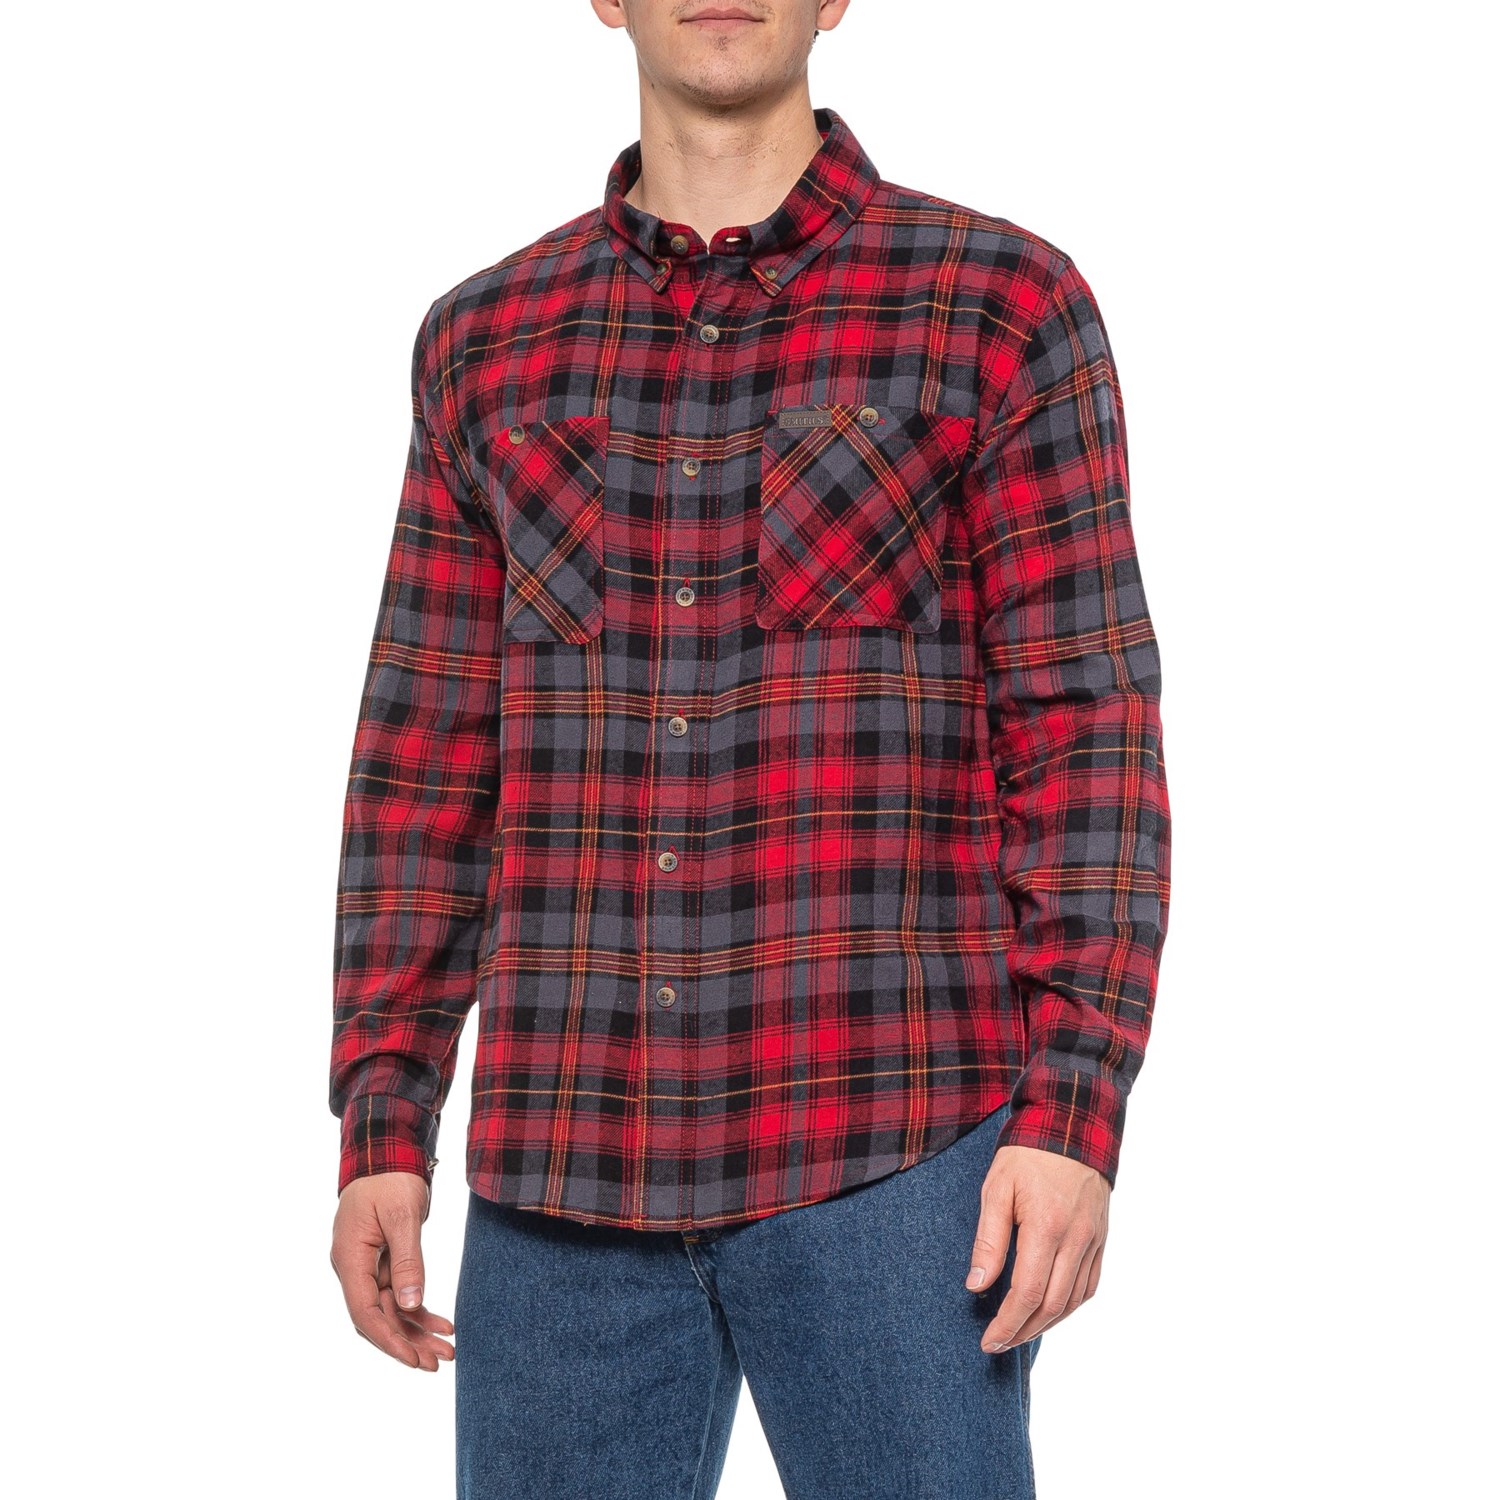 Smith's Workwear Lightweight Flannel Shirt (For Men) - Save 61%